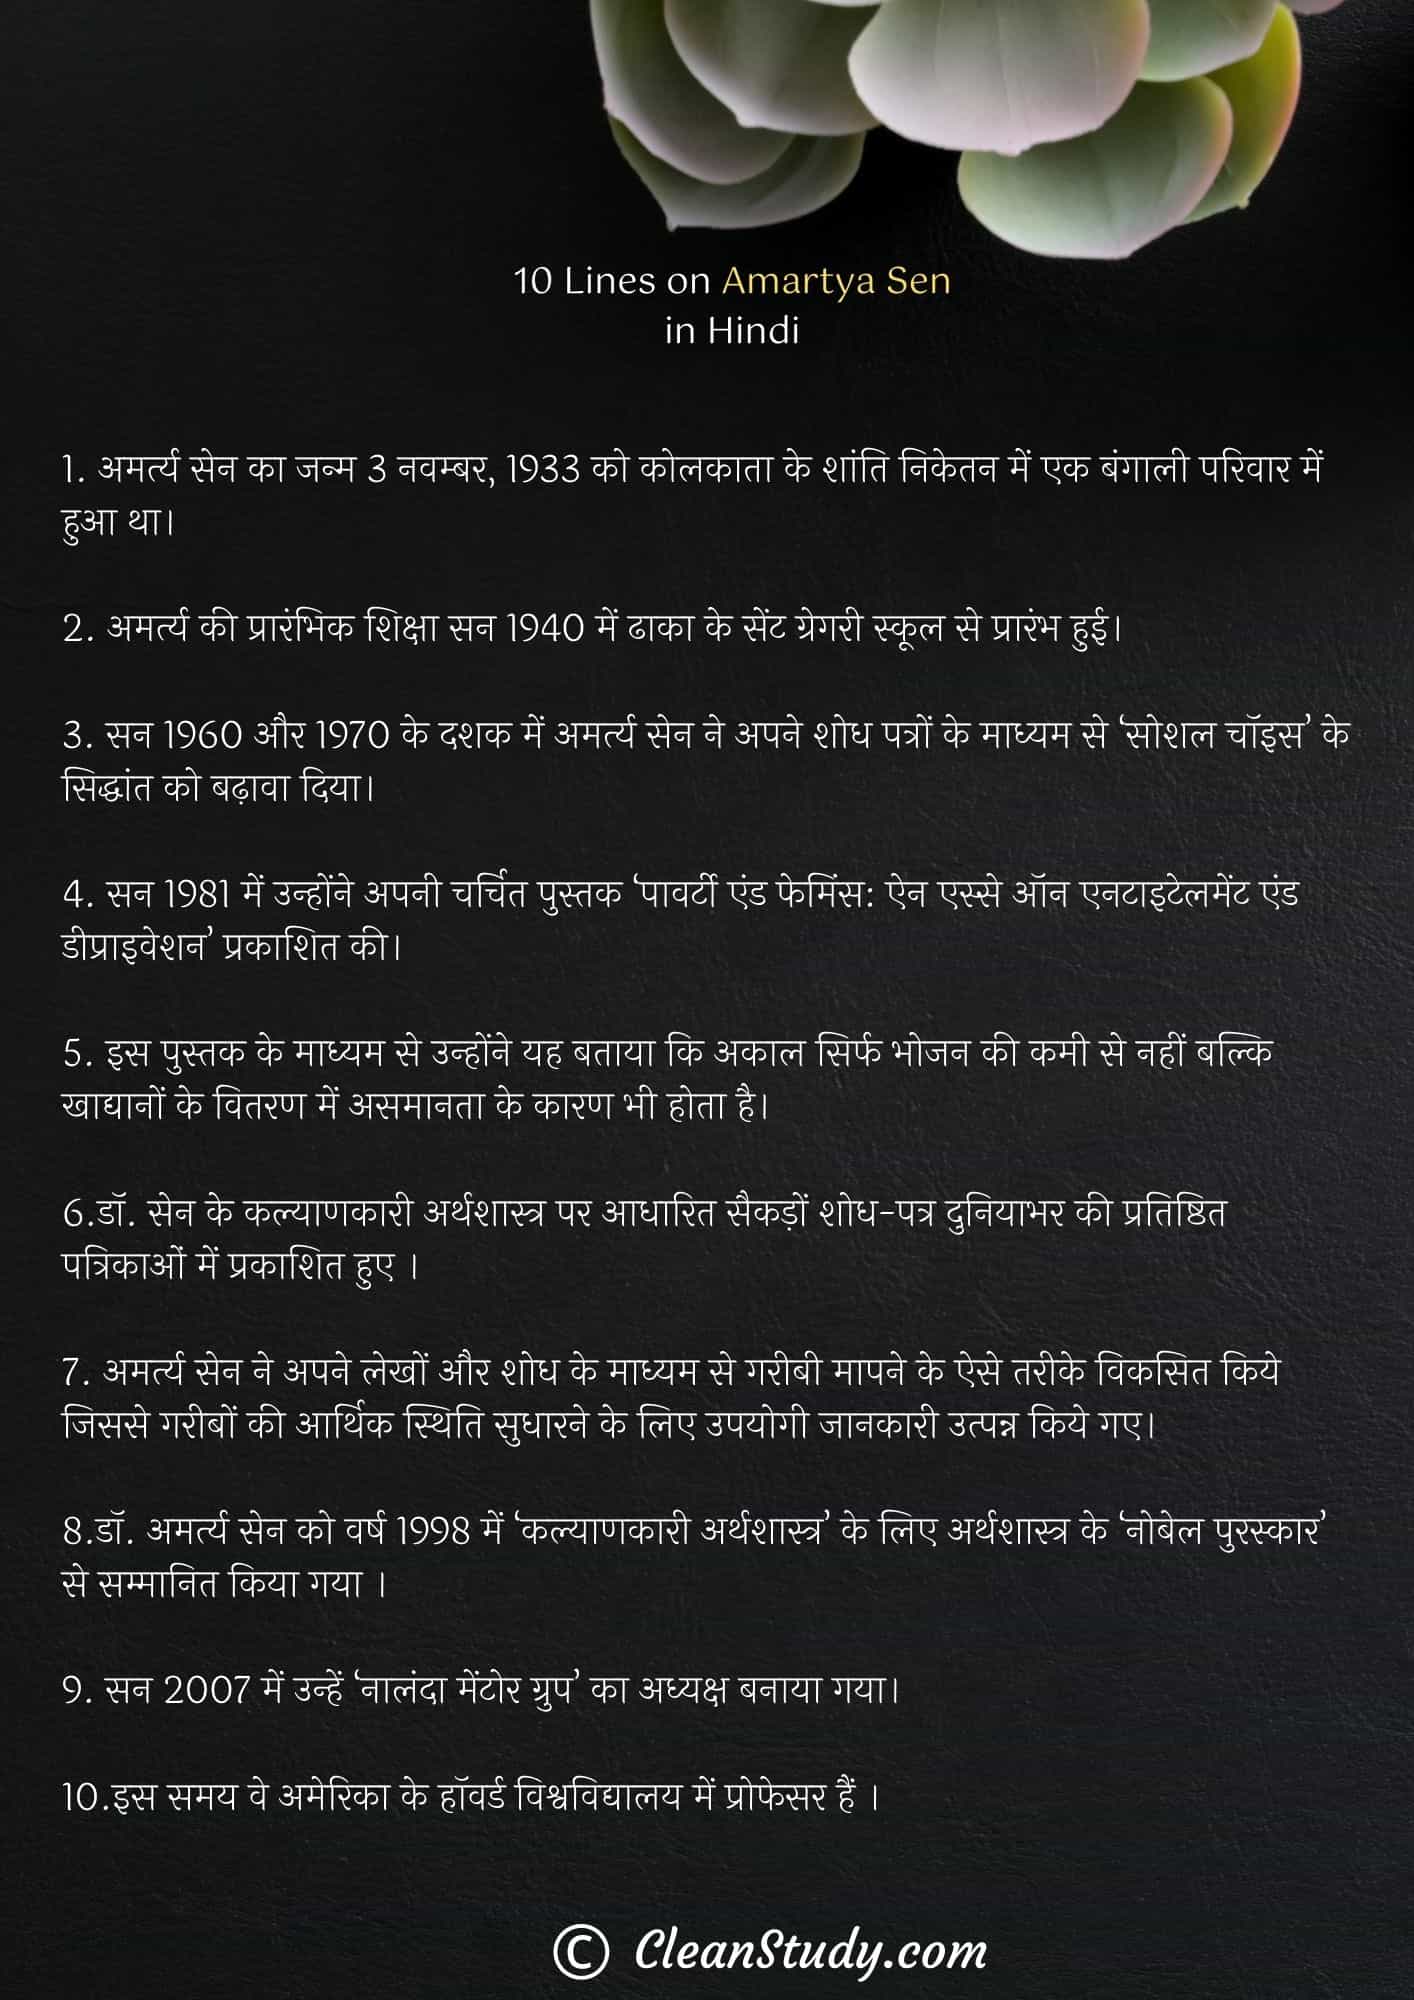 10 Lines on Amartya Sen in Hindi